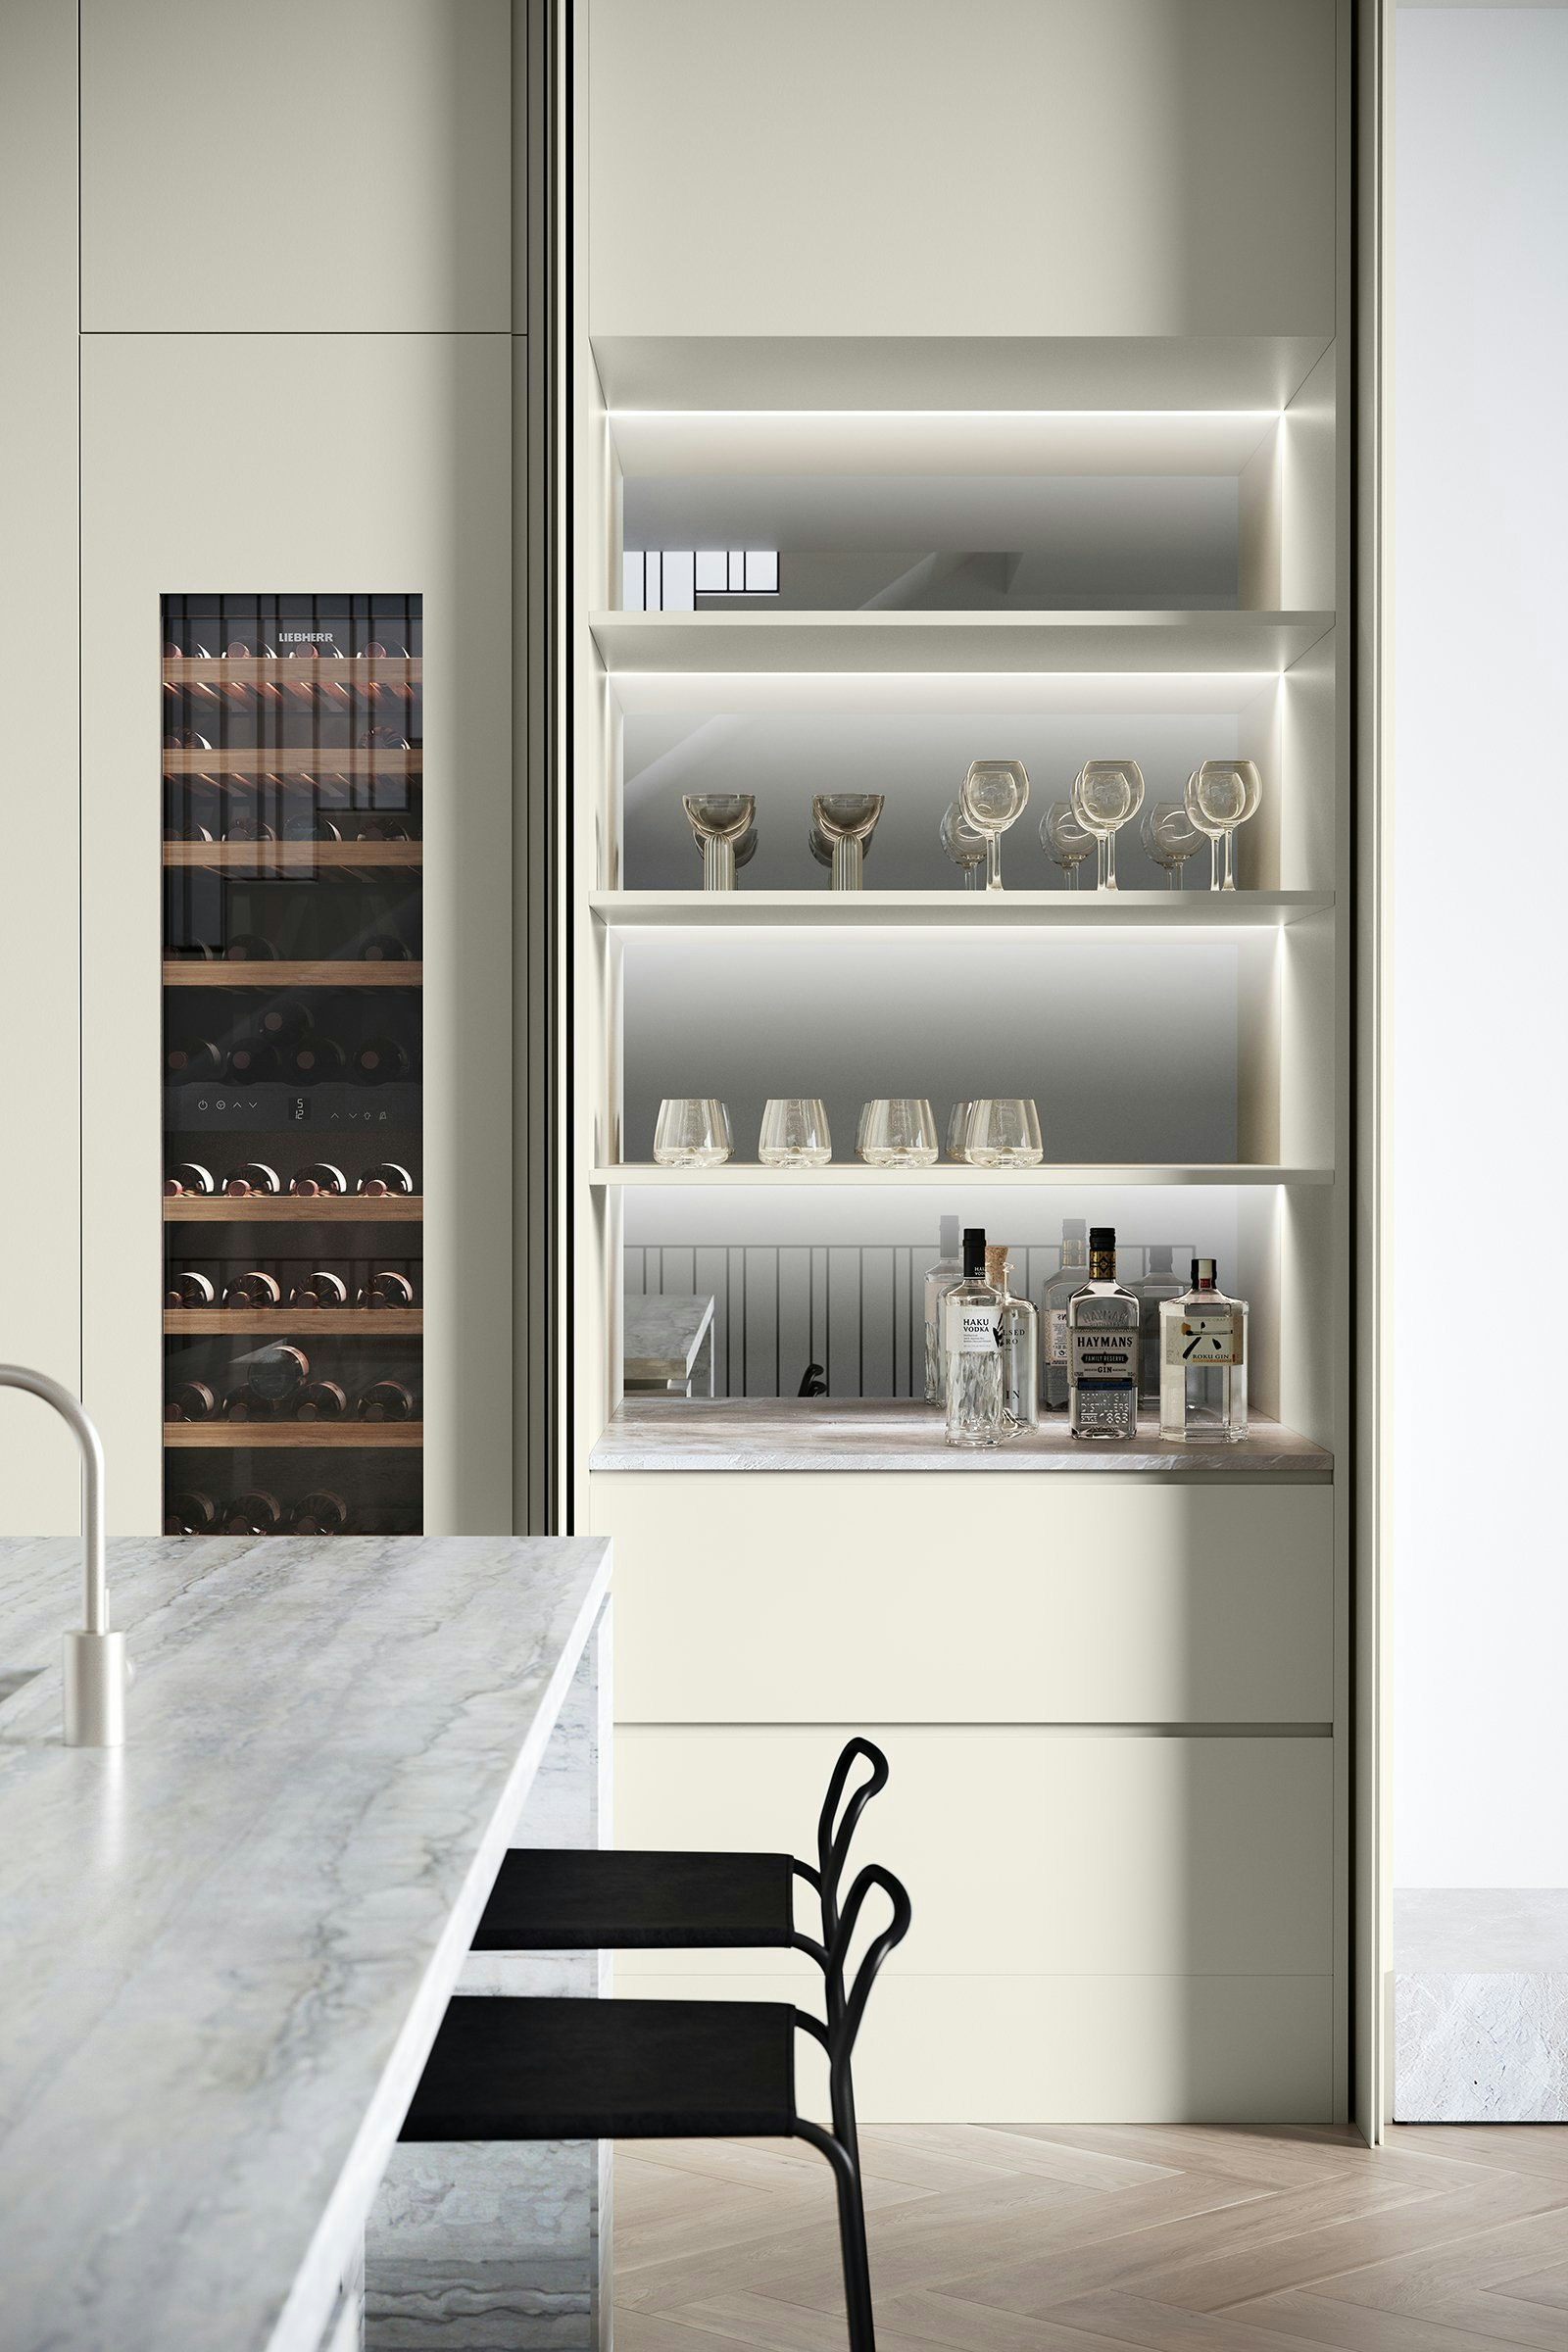 Image of shelf